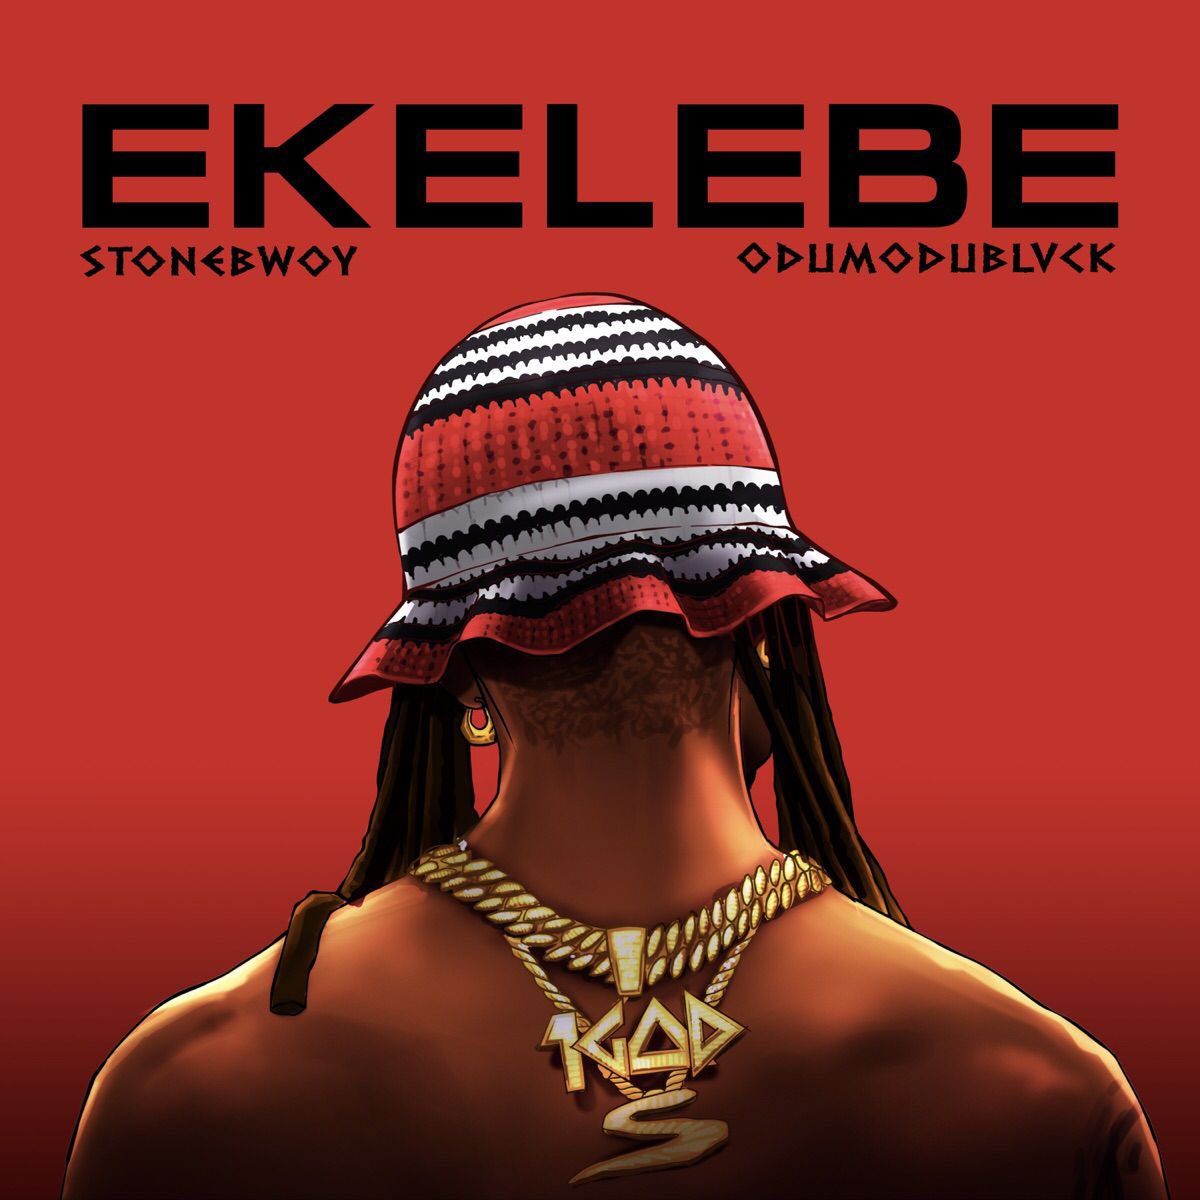 Now this one!
It’s the new banger EKELEBE by @stonebwoy x @Odumodublvck_!

On #newmusicmonday on #ShoutsOnY w/@winstonmicheals x @bigkris_dj !!